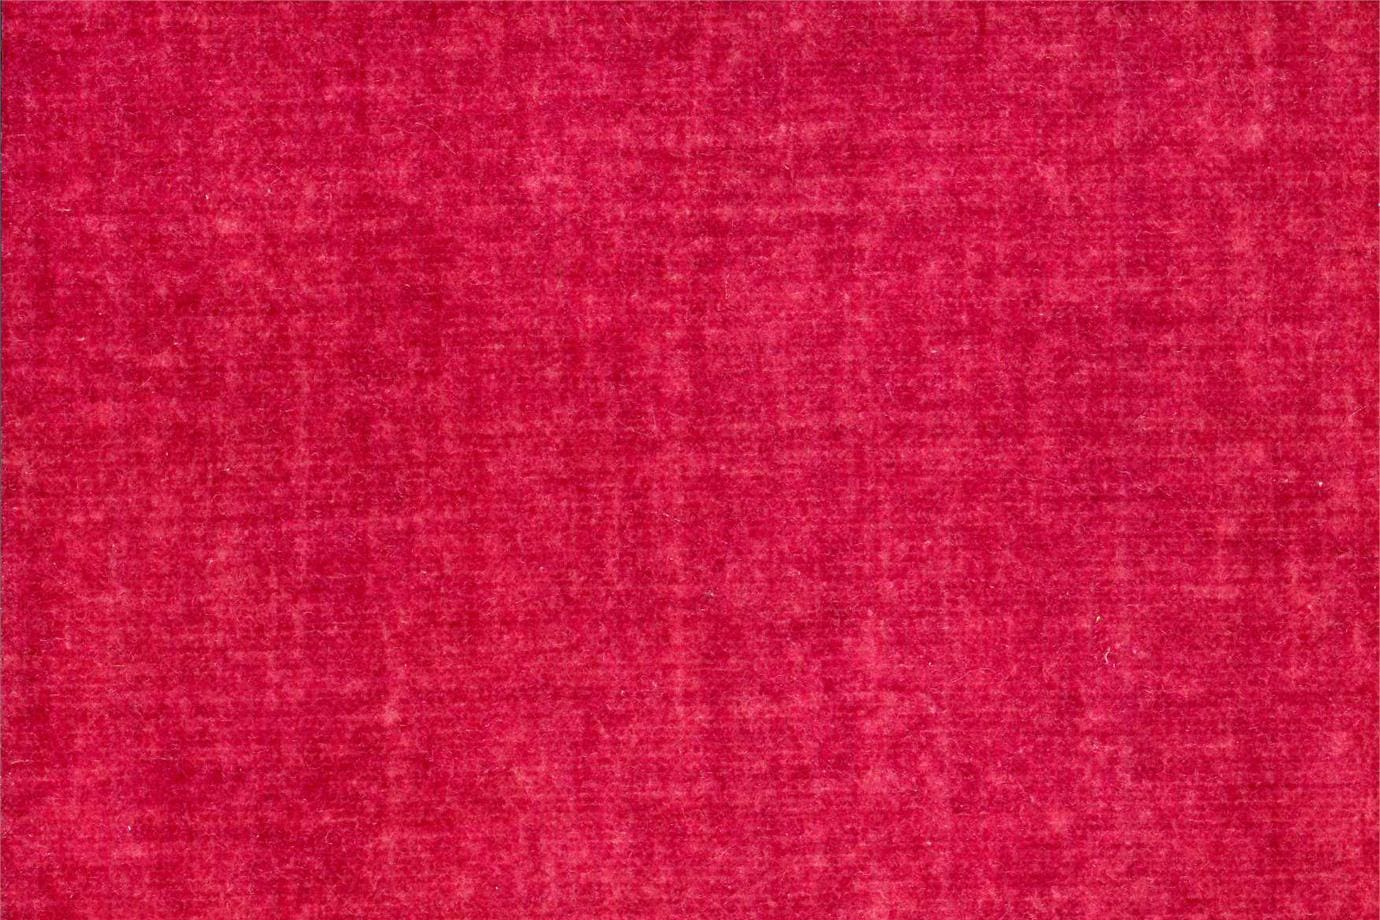 J1952 SAN VITTORE 001 Petalo home decoration fabric